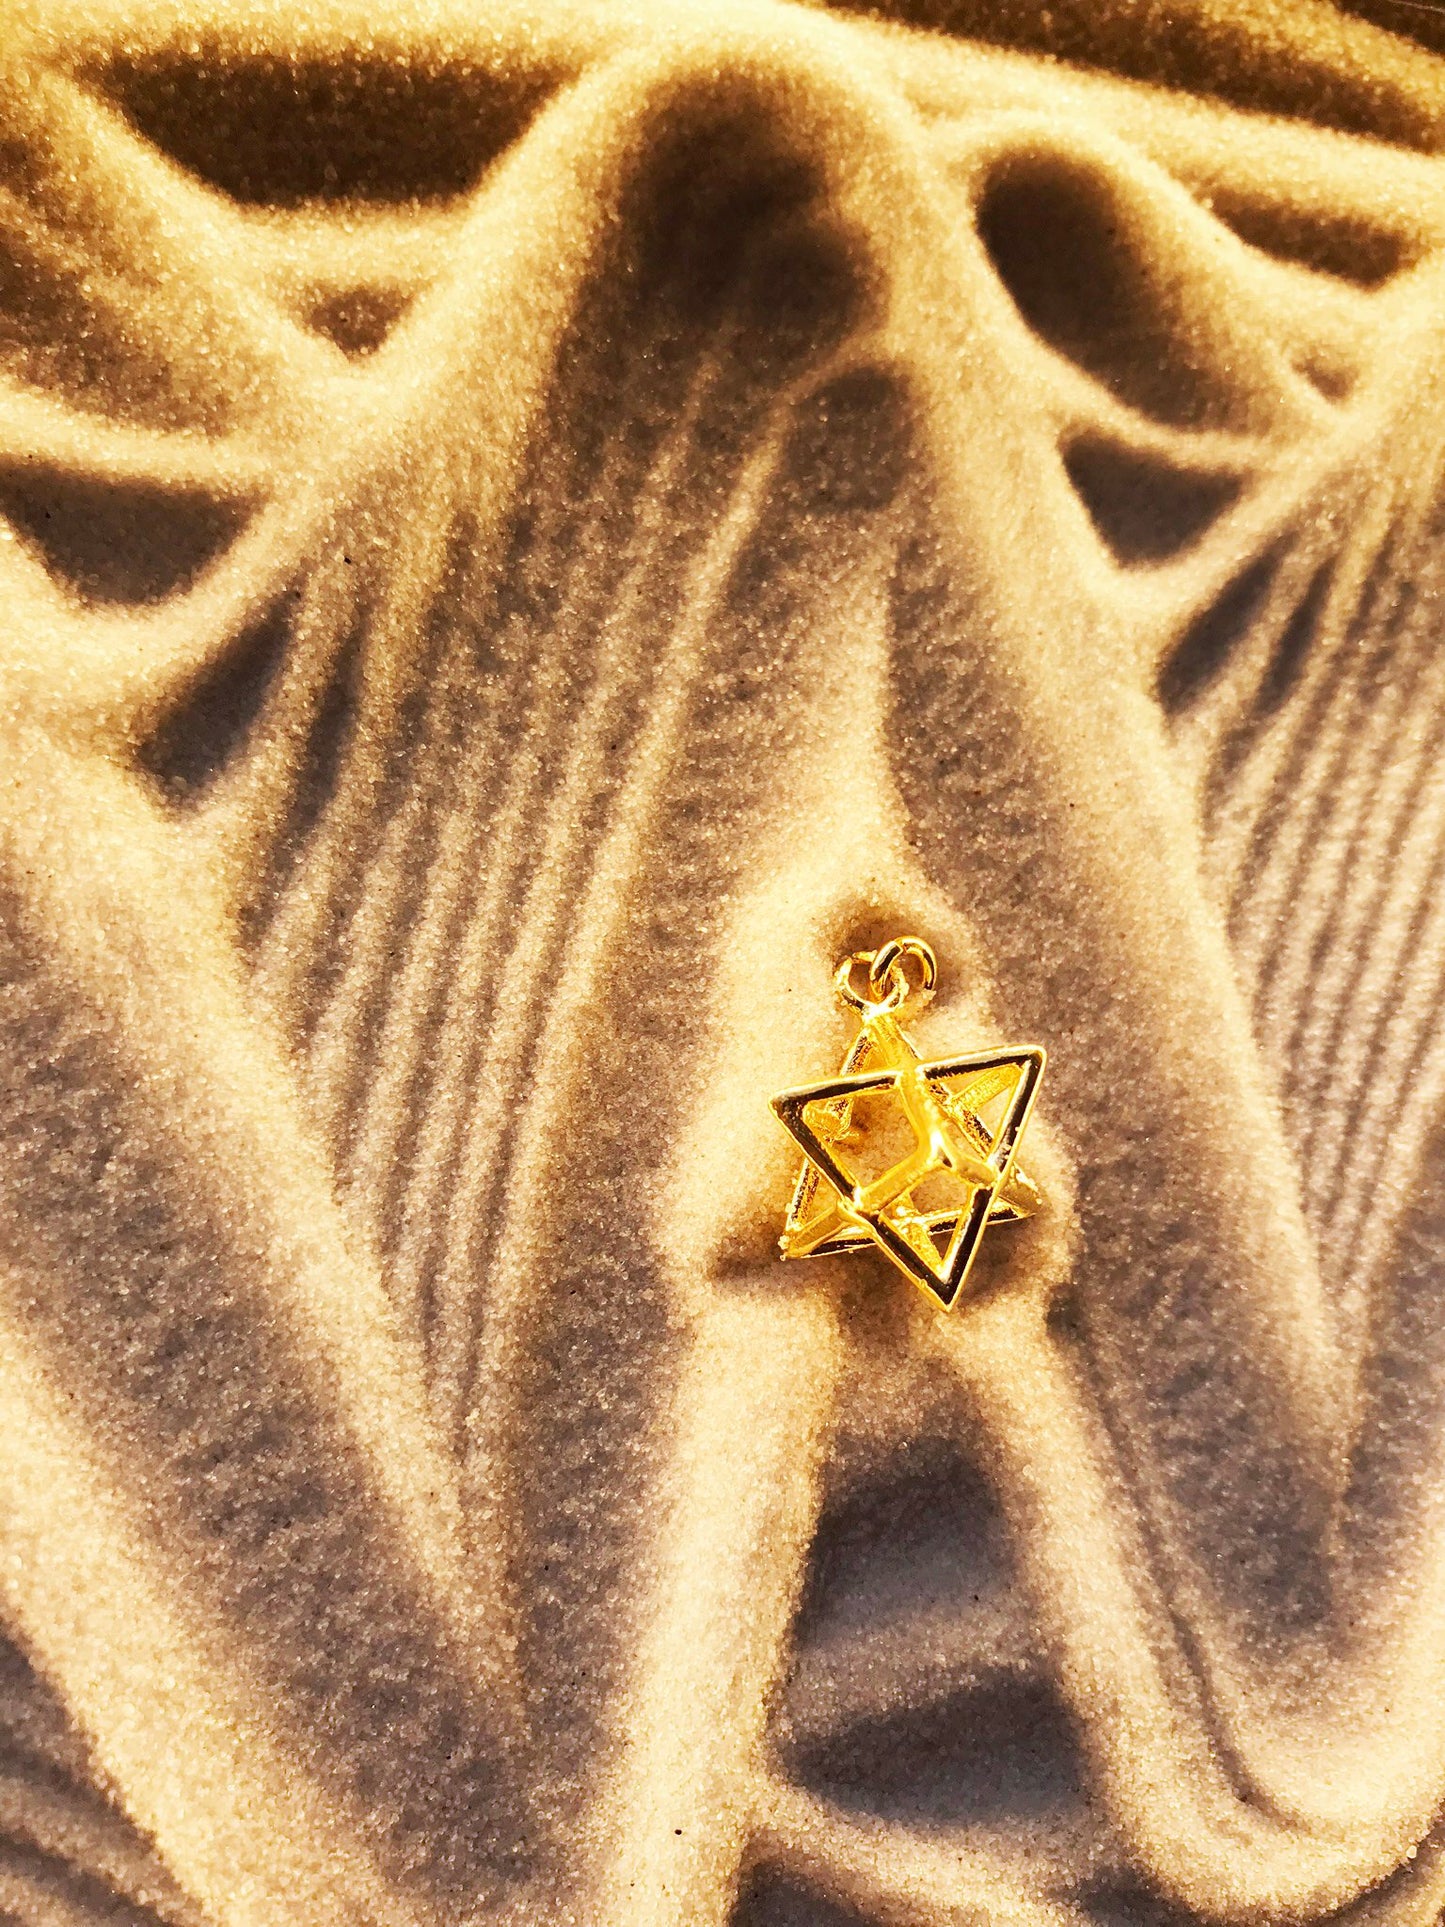 Shakti Bhakti Pendant with Star Tetrahedron - 24K Gold Plated - Labradorite